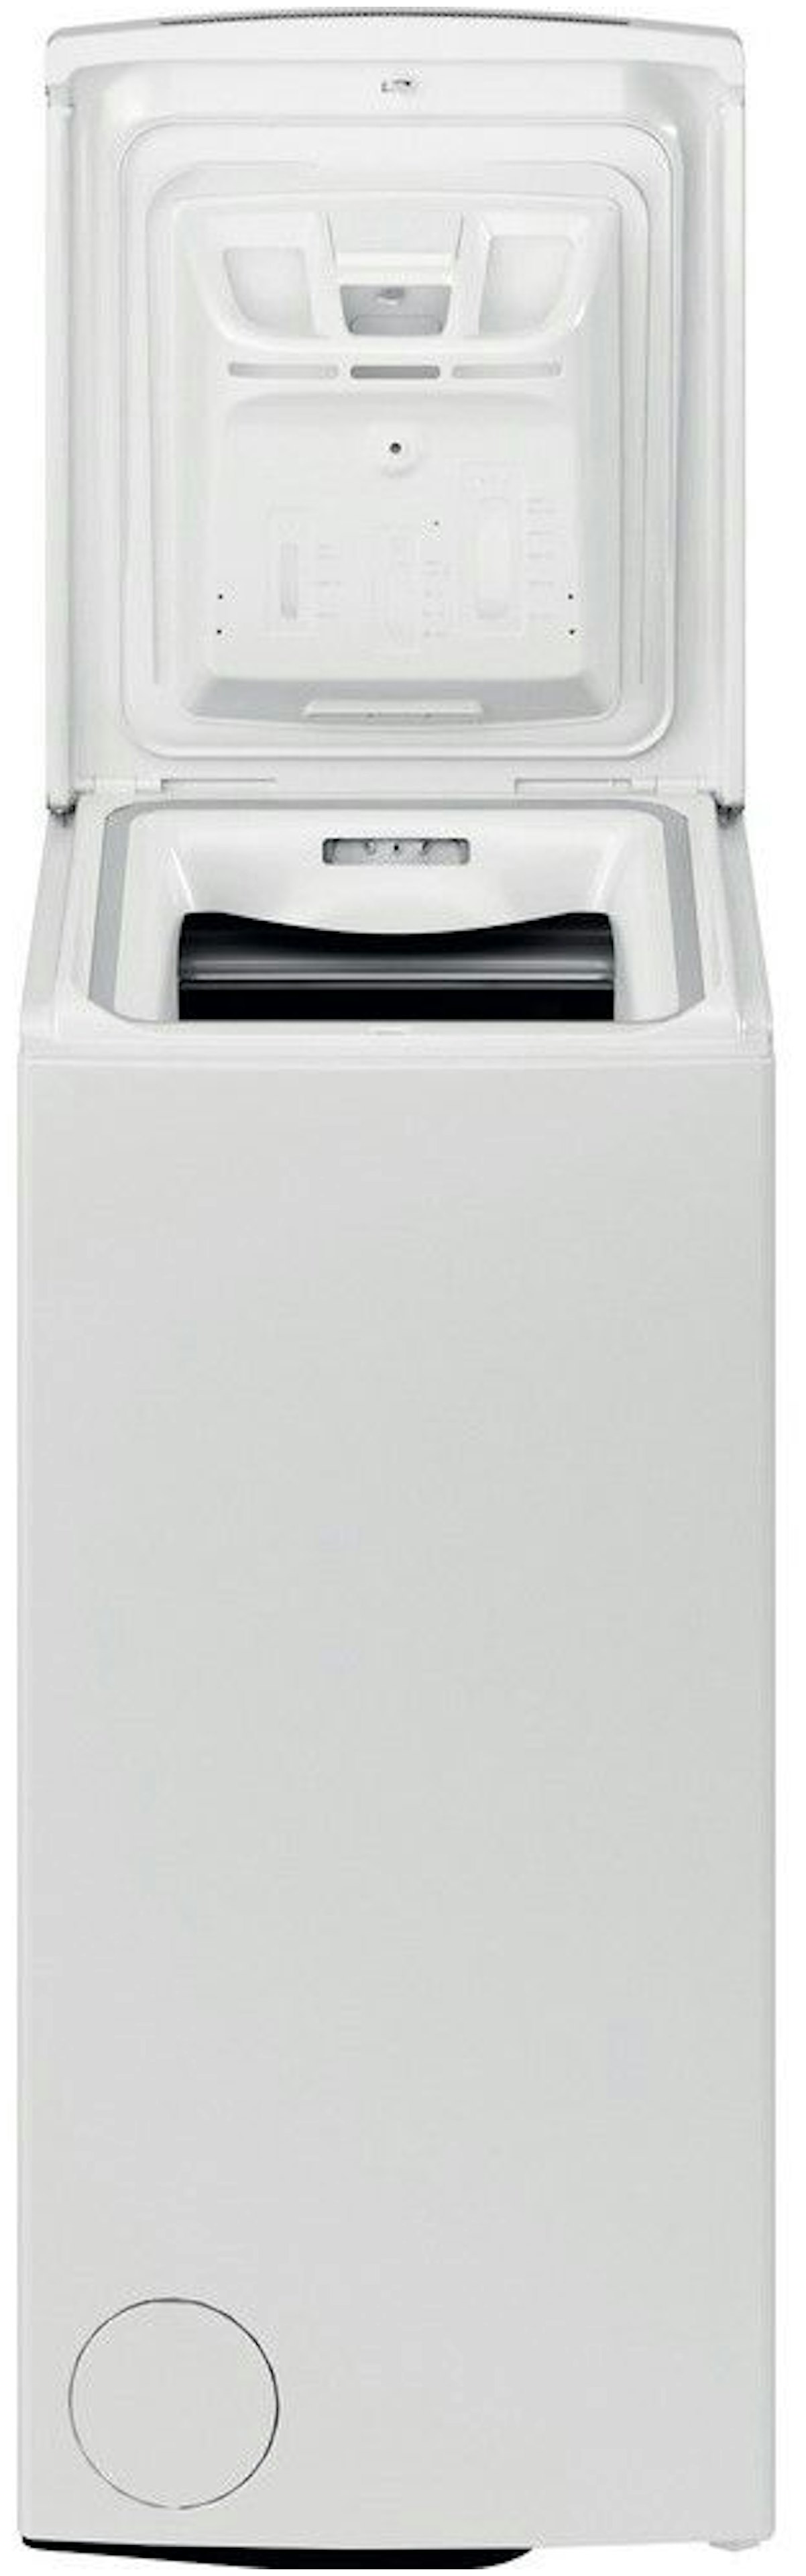 Whirlpool wasmachine  TDLRBX 6252BS BE afbeelding 4